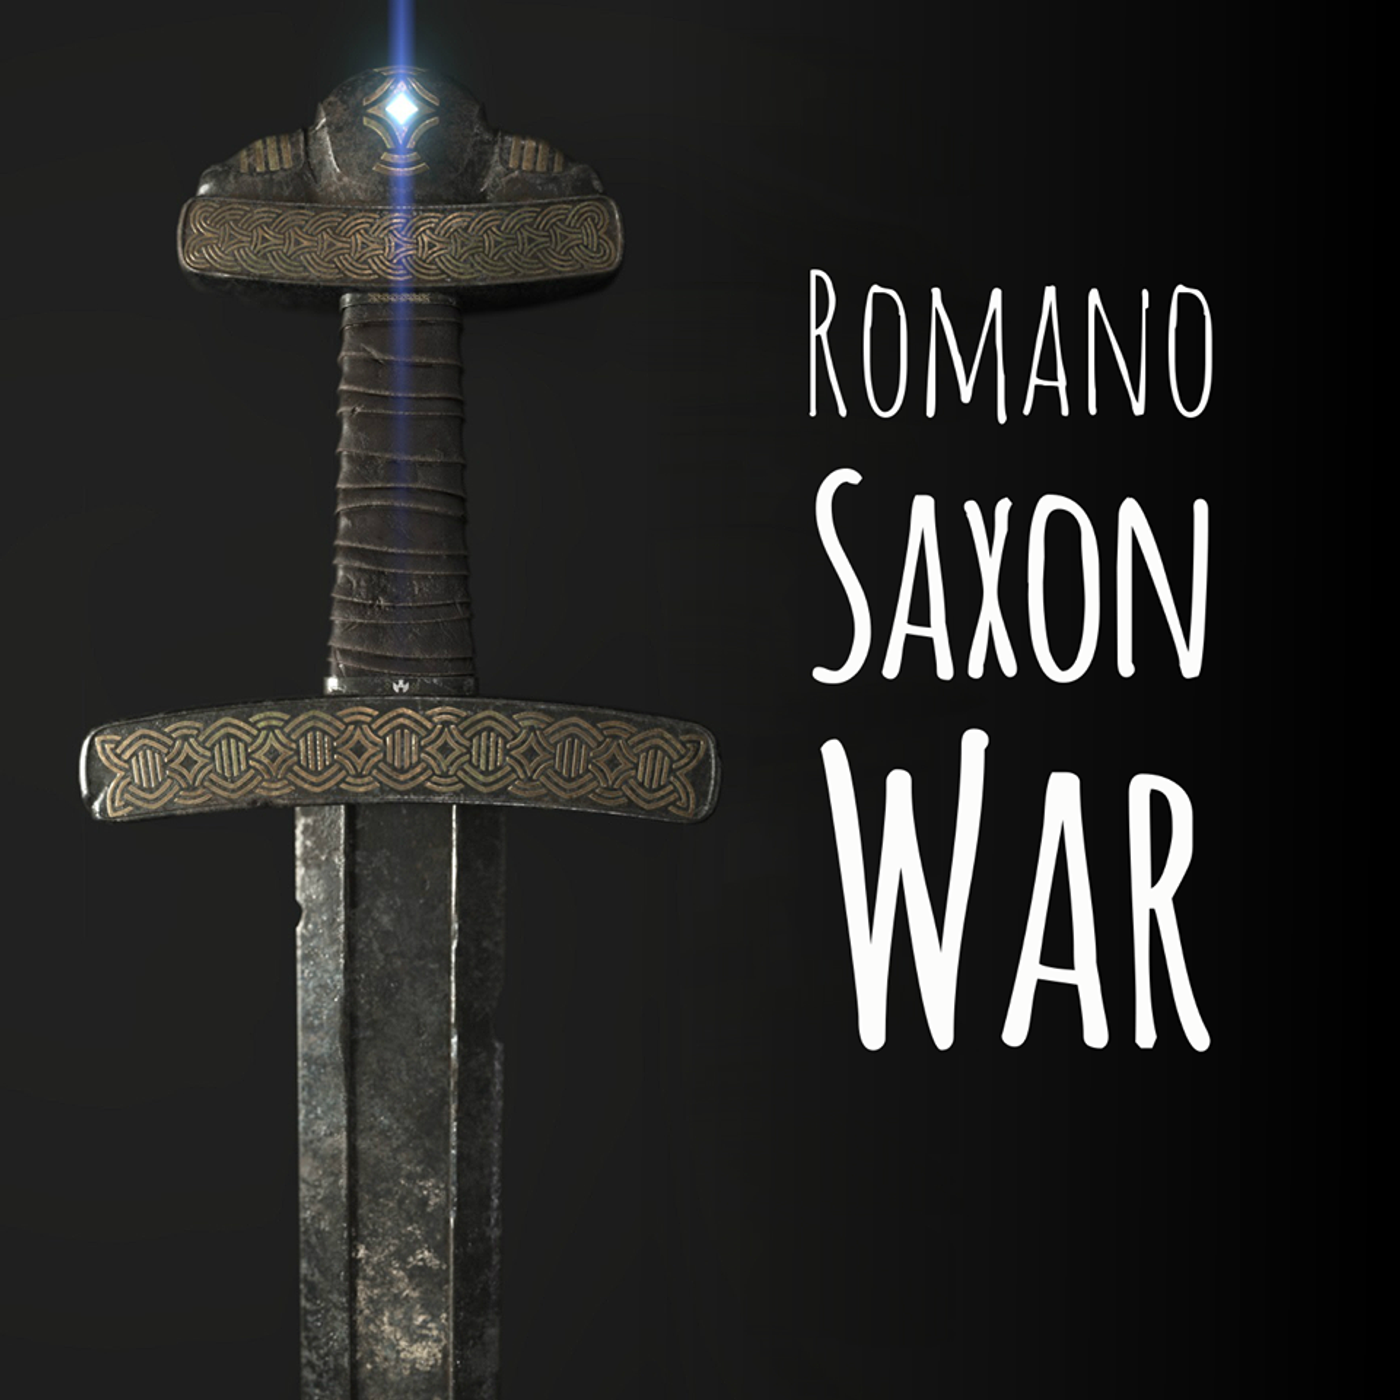 Romano Saxon War, Part 9